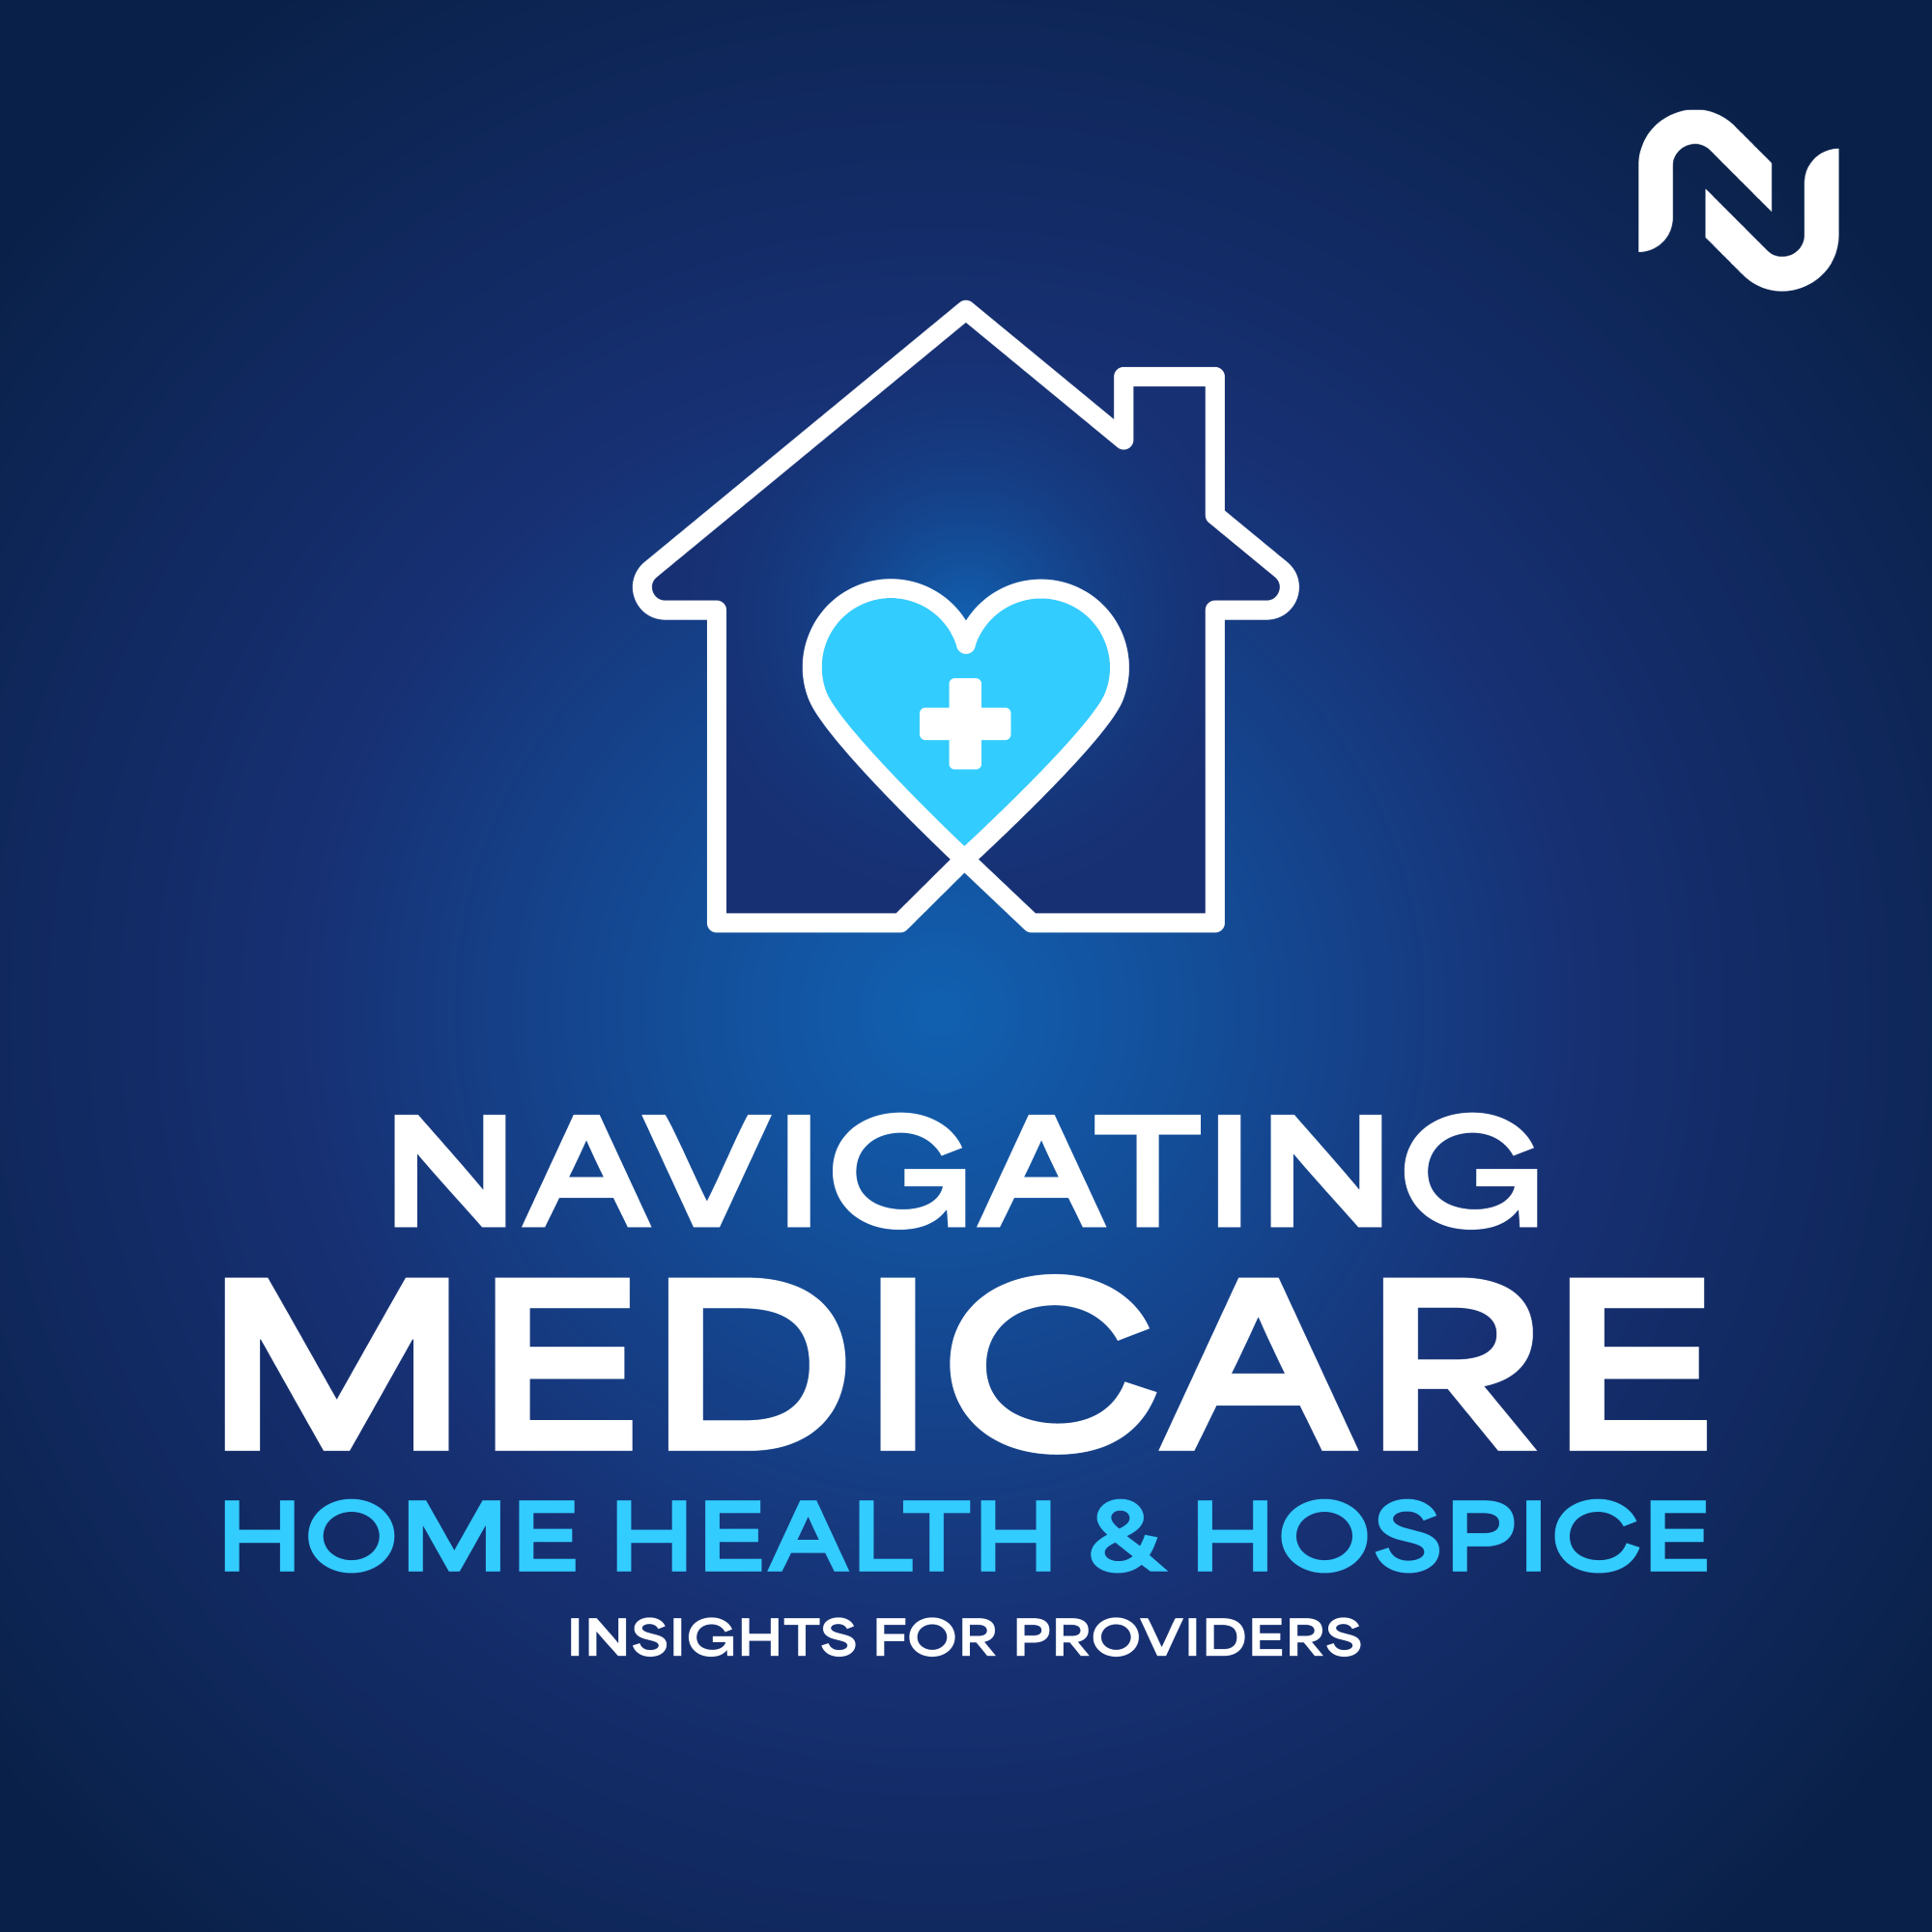 Navigating Medicare Home Health & Hospice